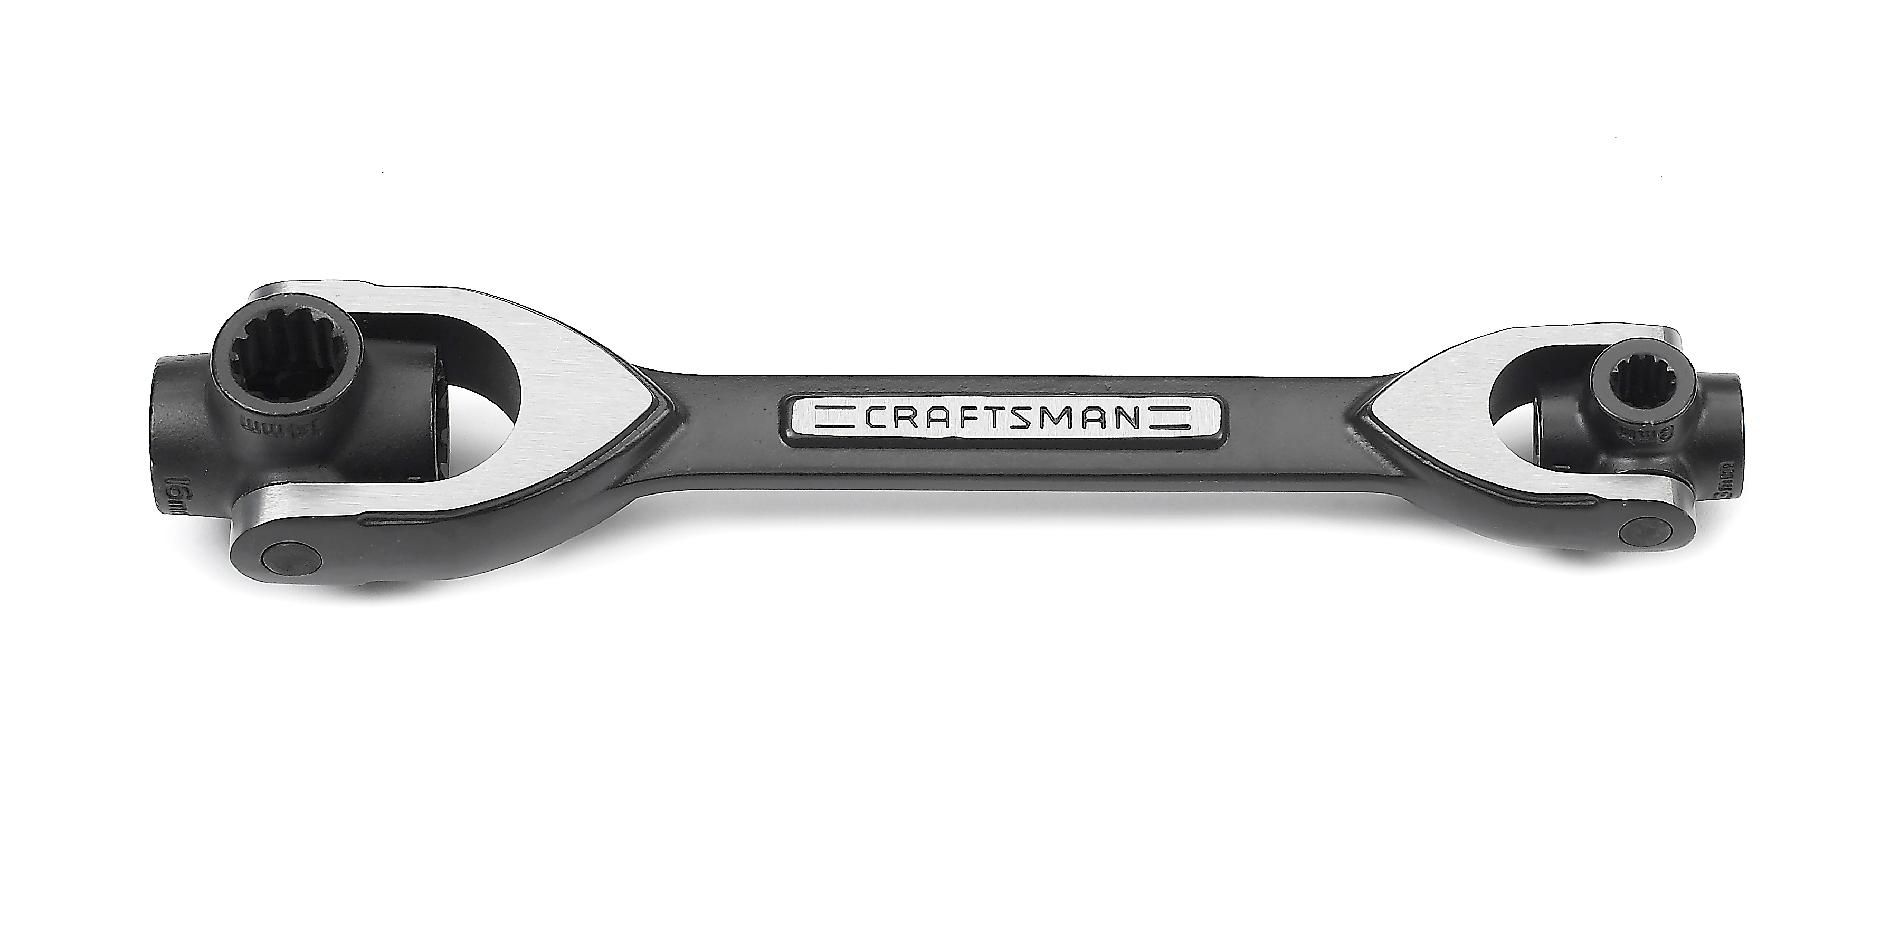 Craftsman 65-in-1 Universal Multi-tool Just $9.79!